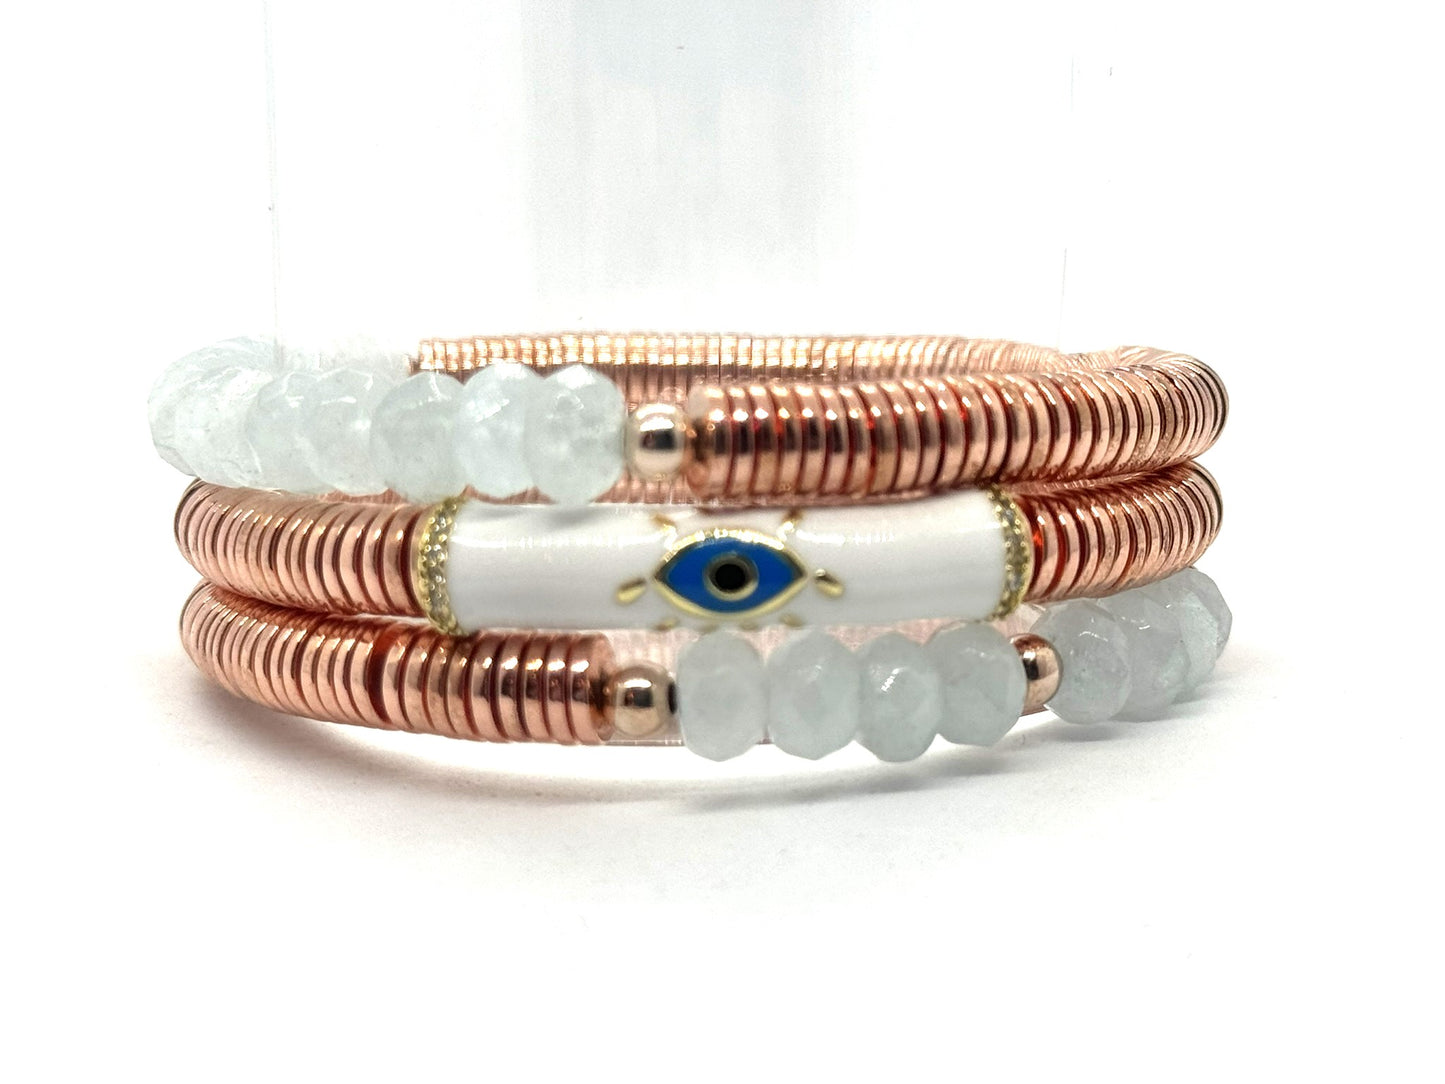 Enamel Evil Eye and Silver Hematite Bracelet